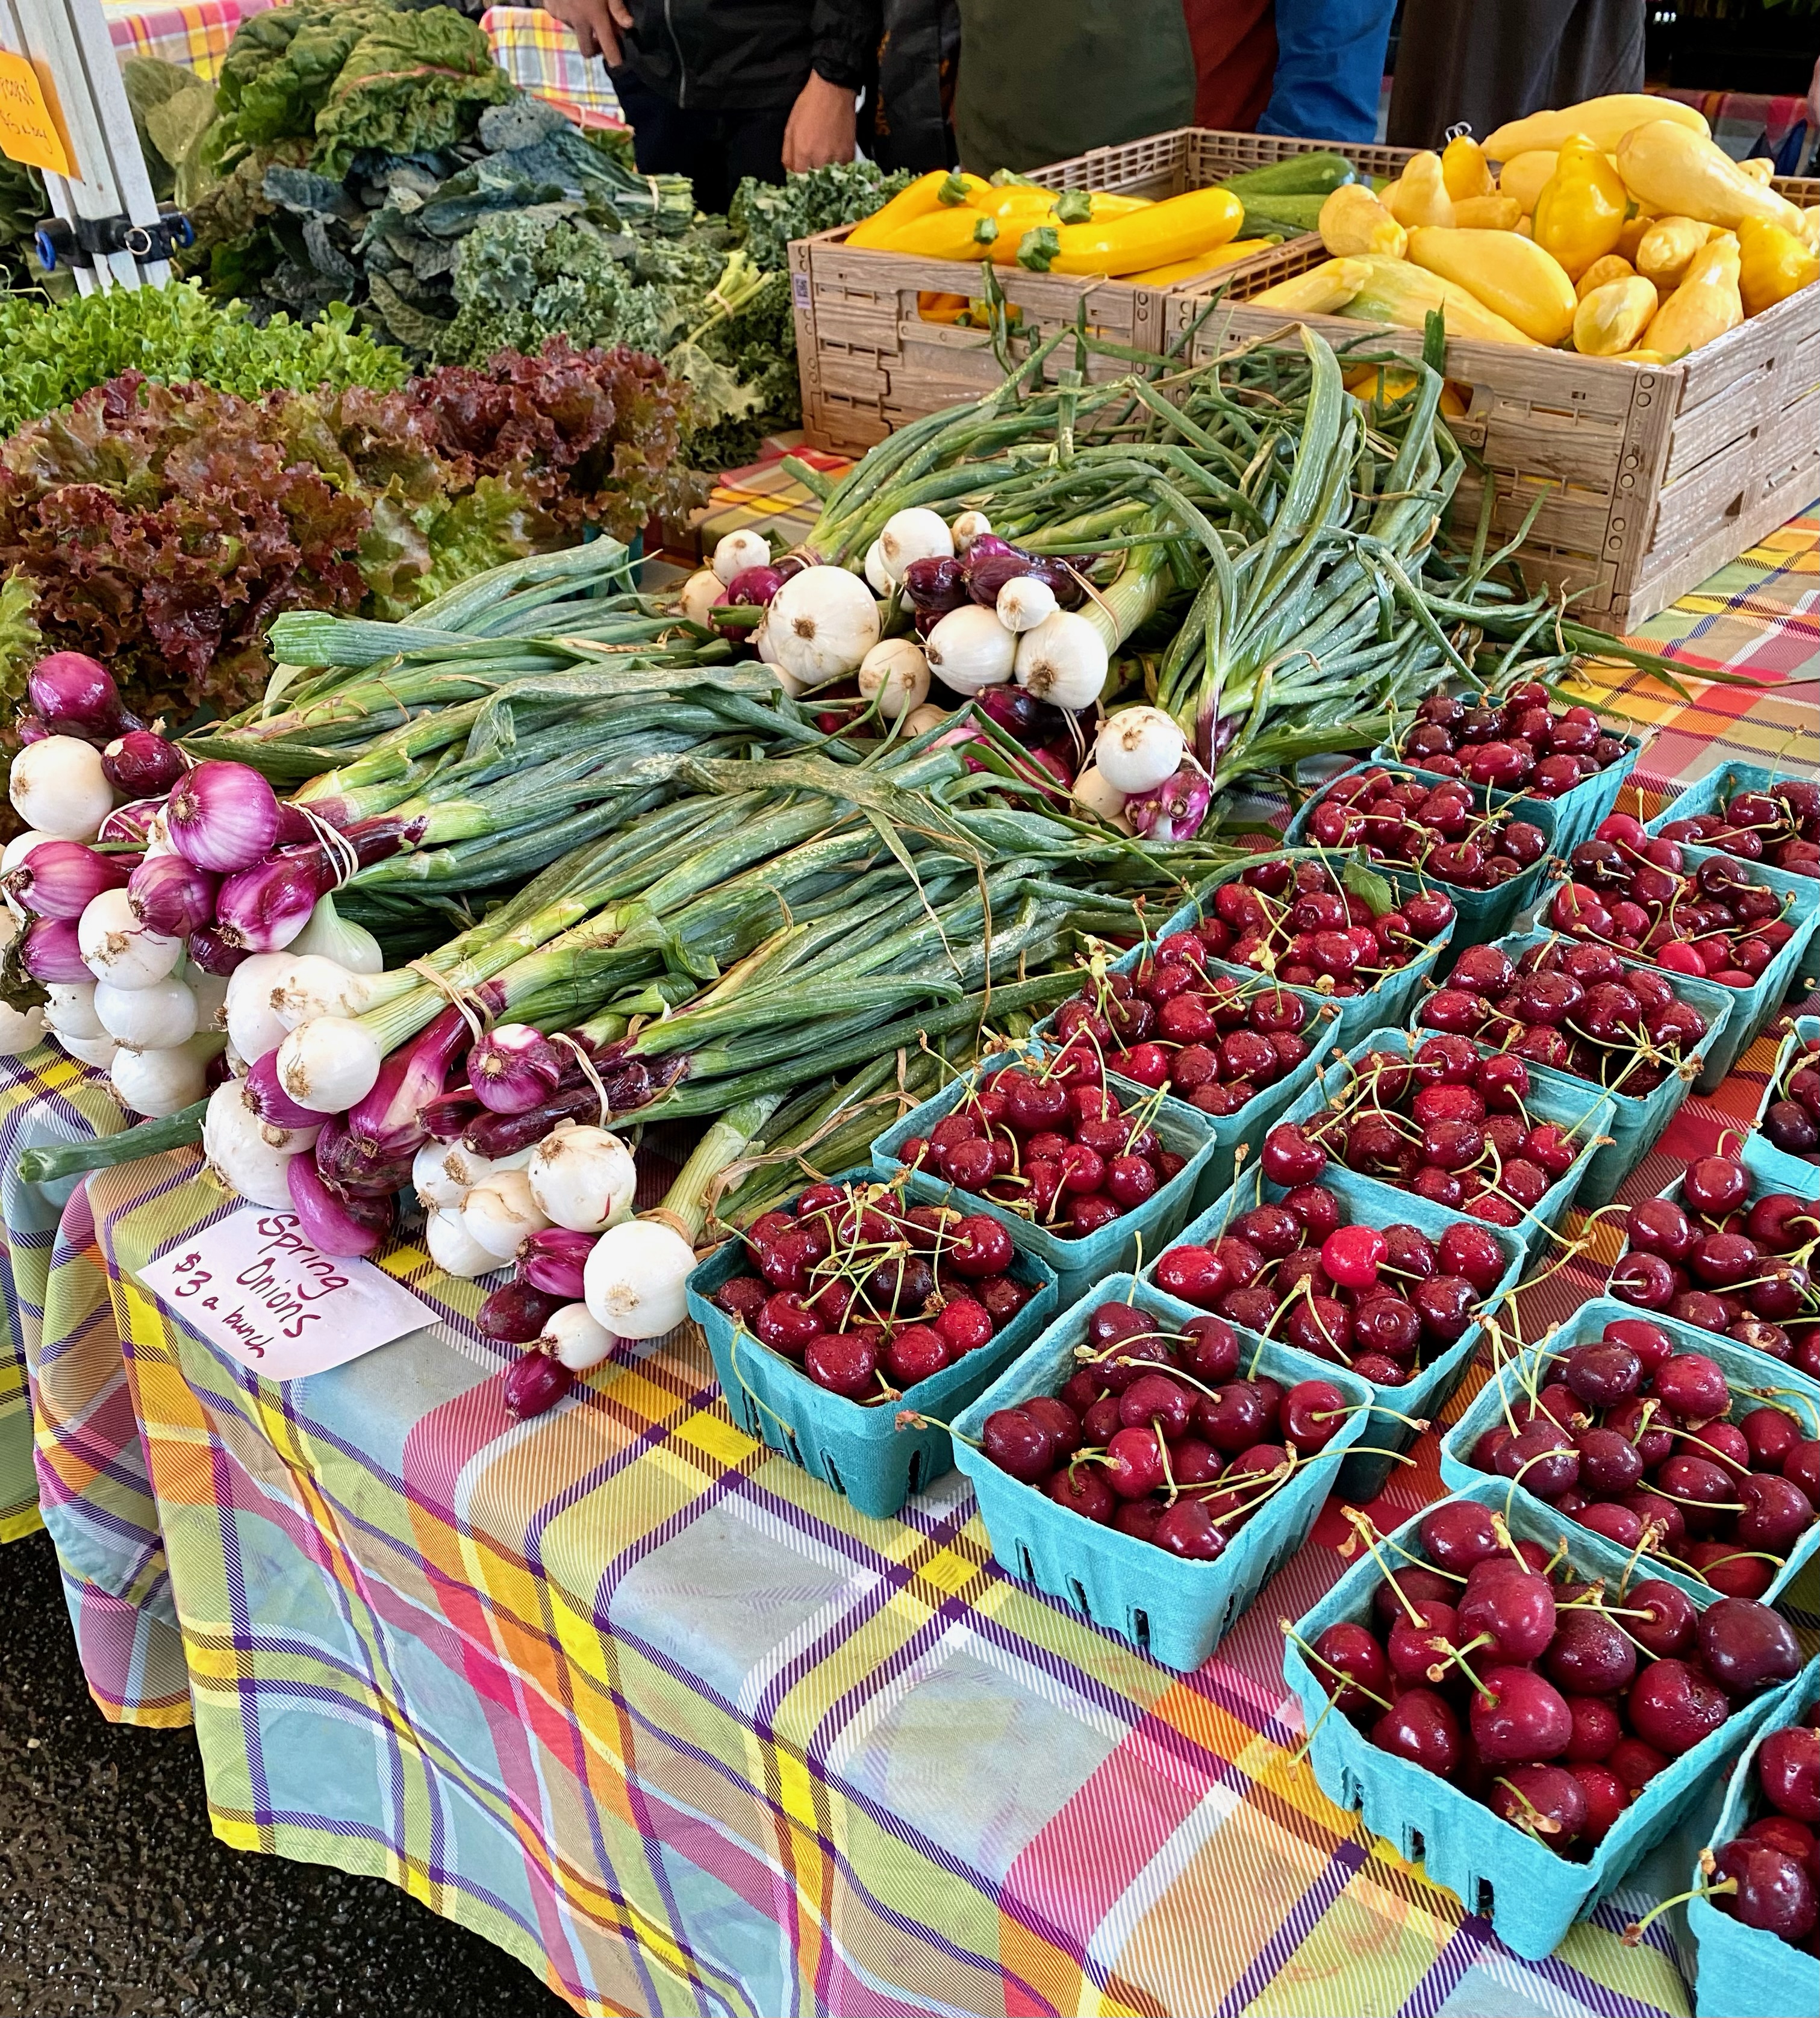 Produce at Fairfax County Farmers Market